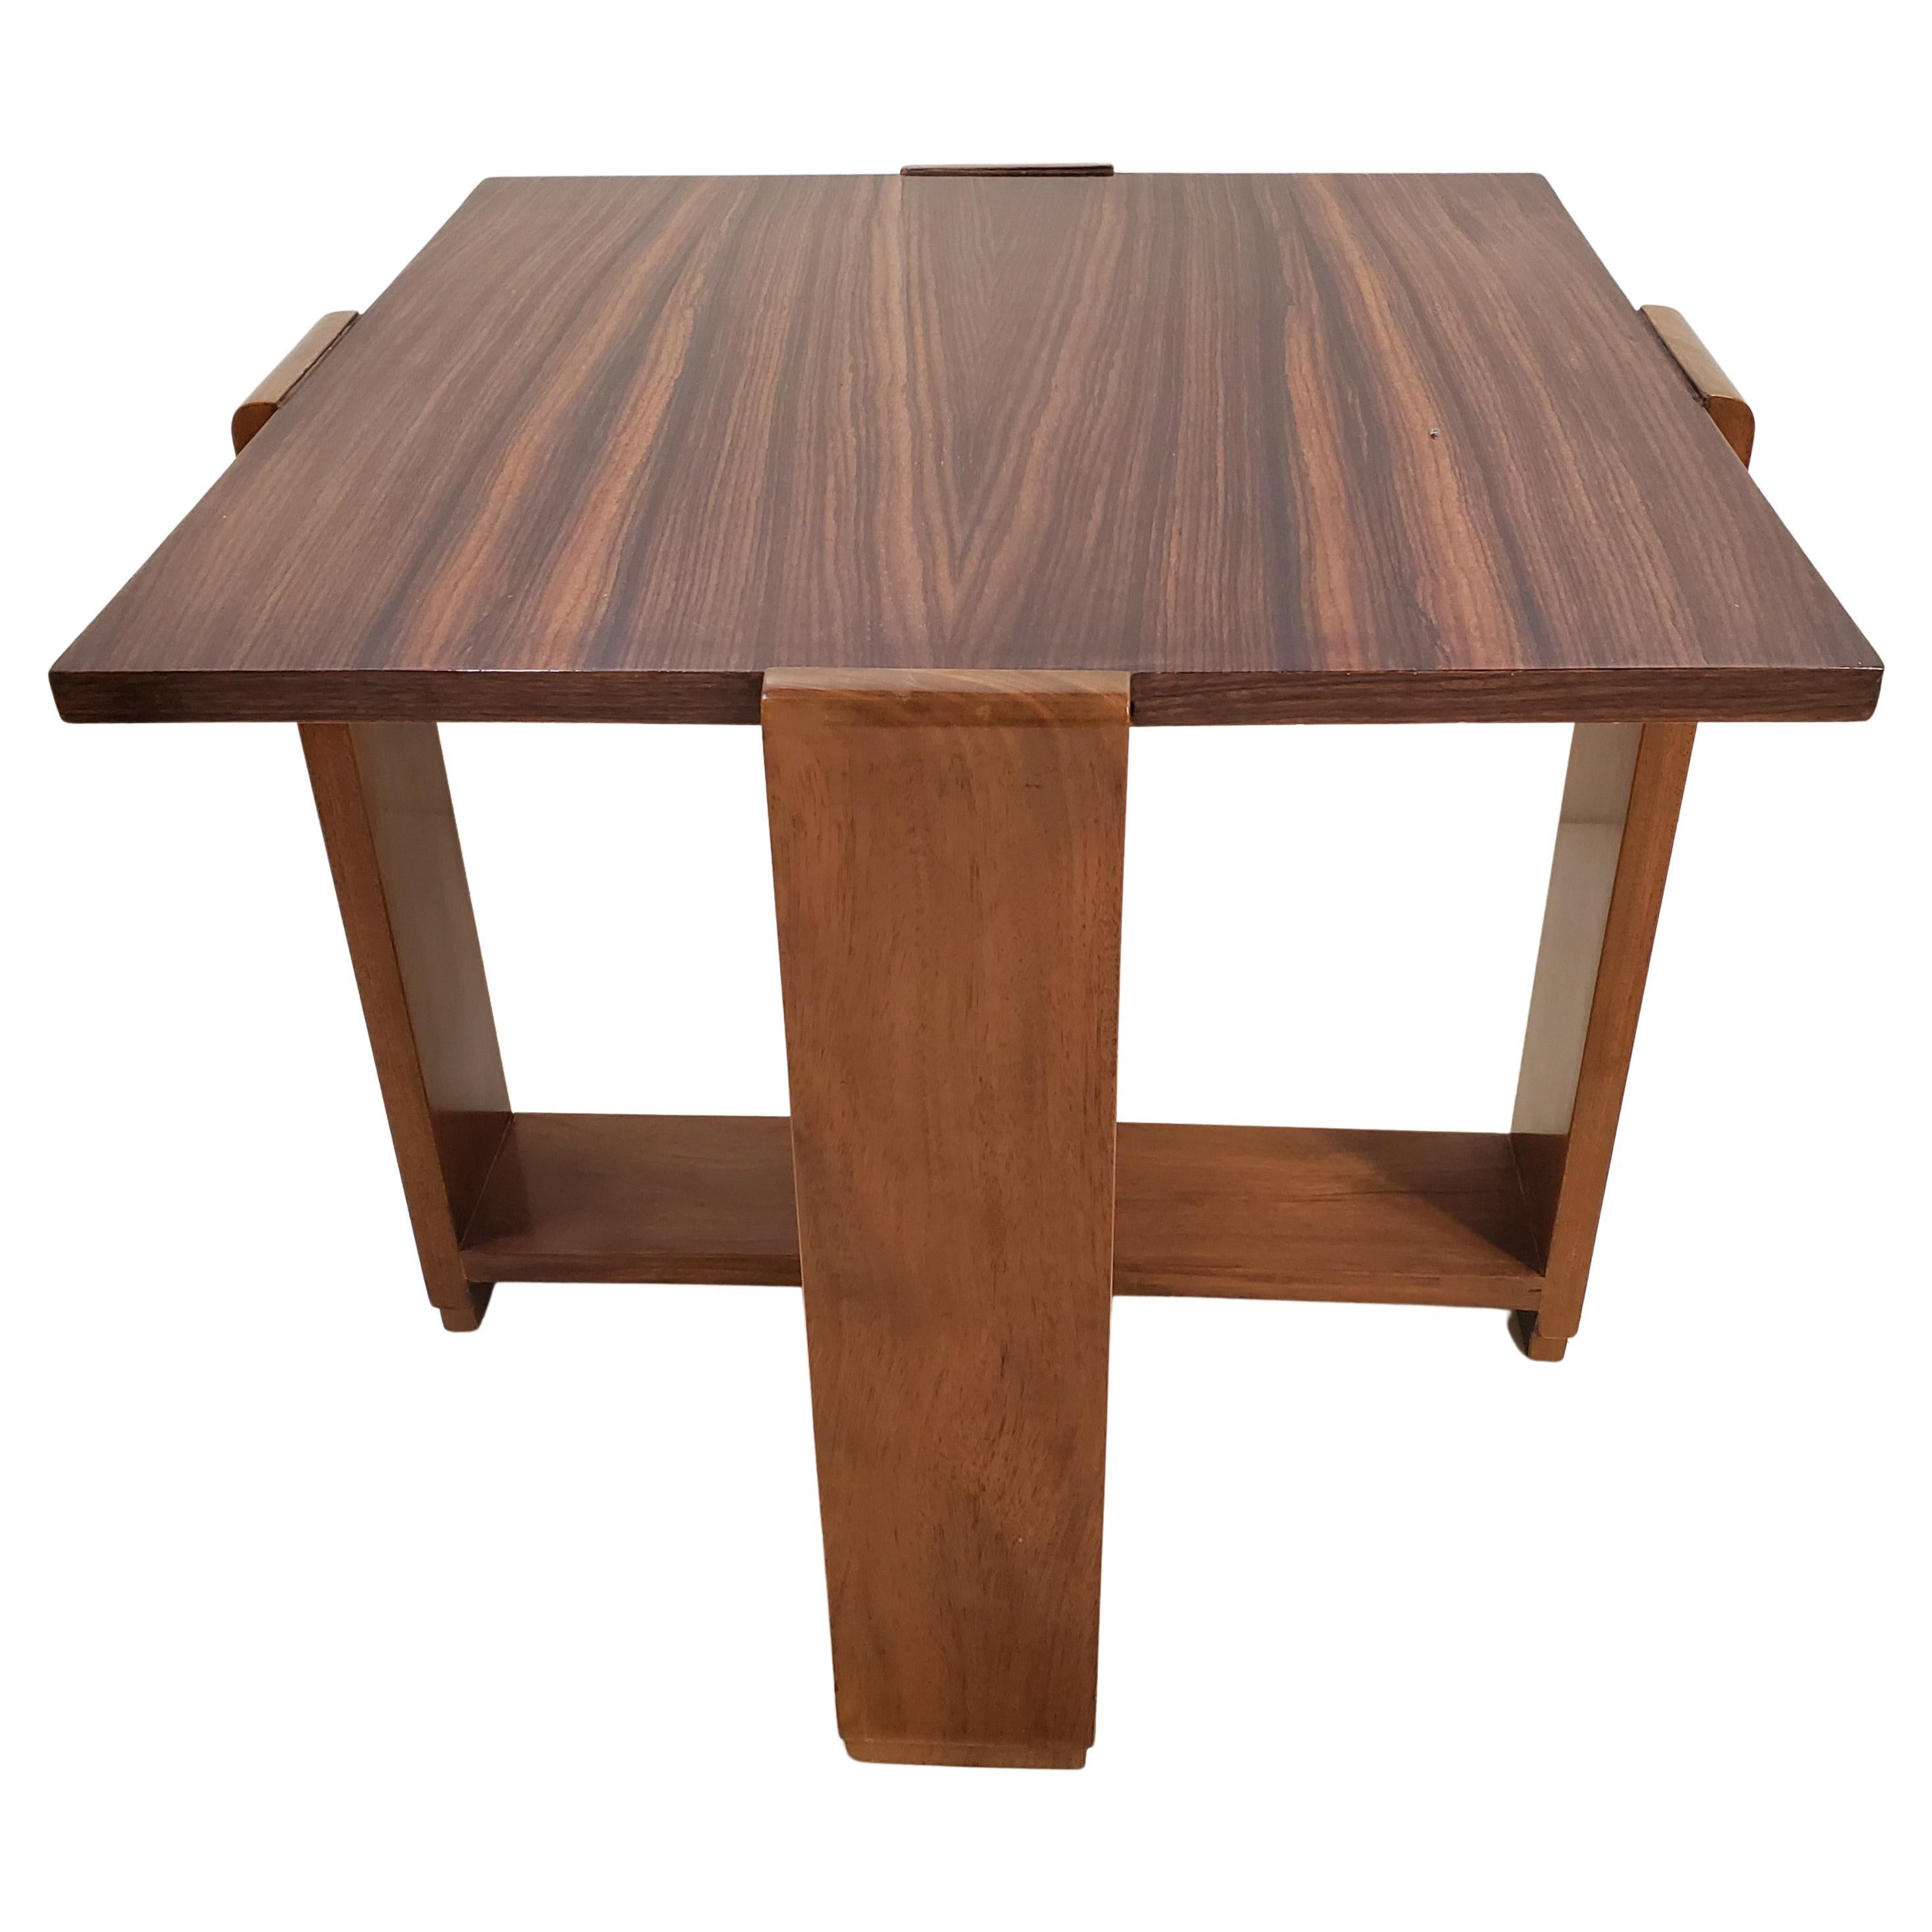 Original French Art Deco Macassar Ebony Square Table, Michel Roux-Spitz